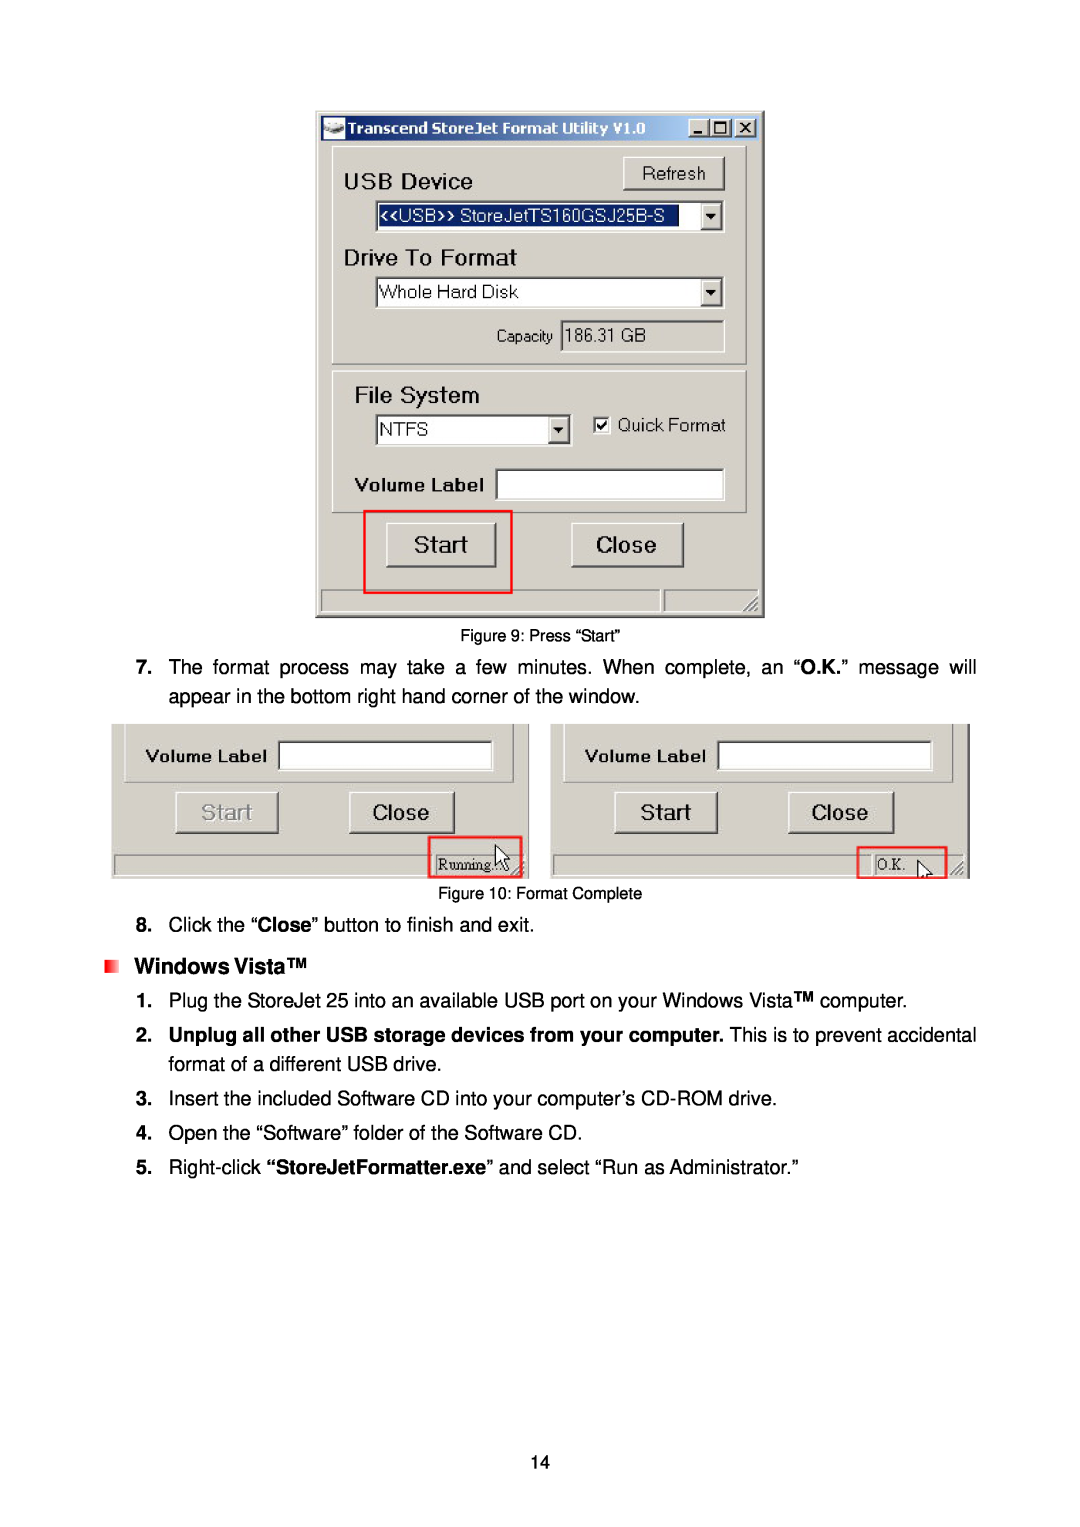 Transcend Information 25P user manual Windows Vista, Press “Start”, Format Complete 